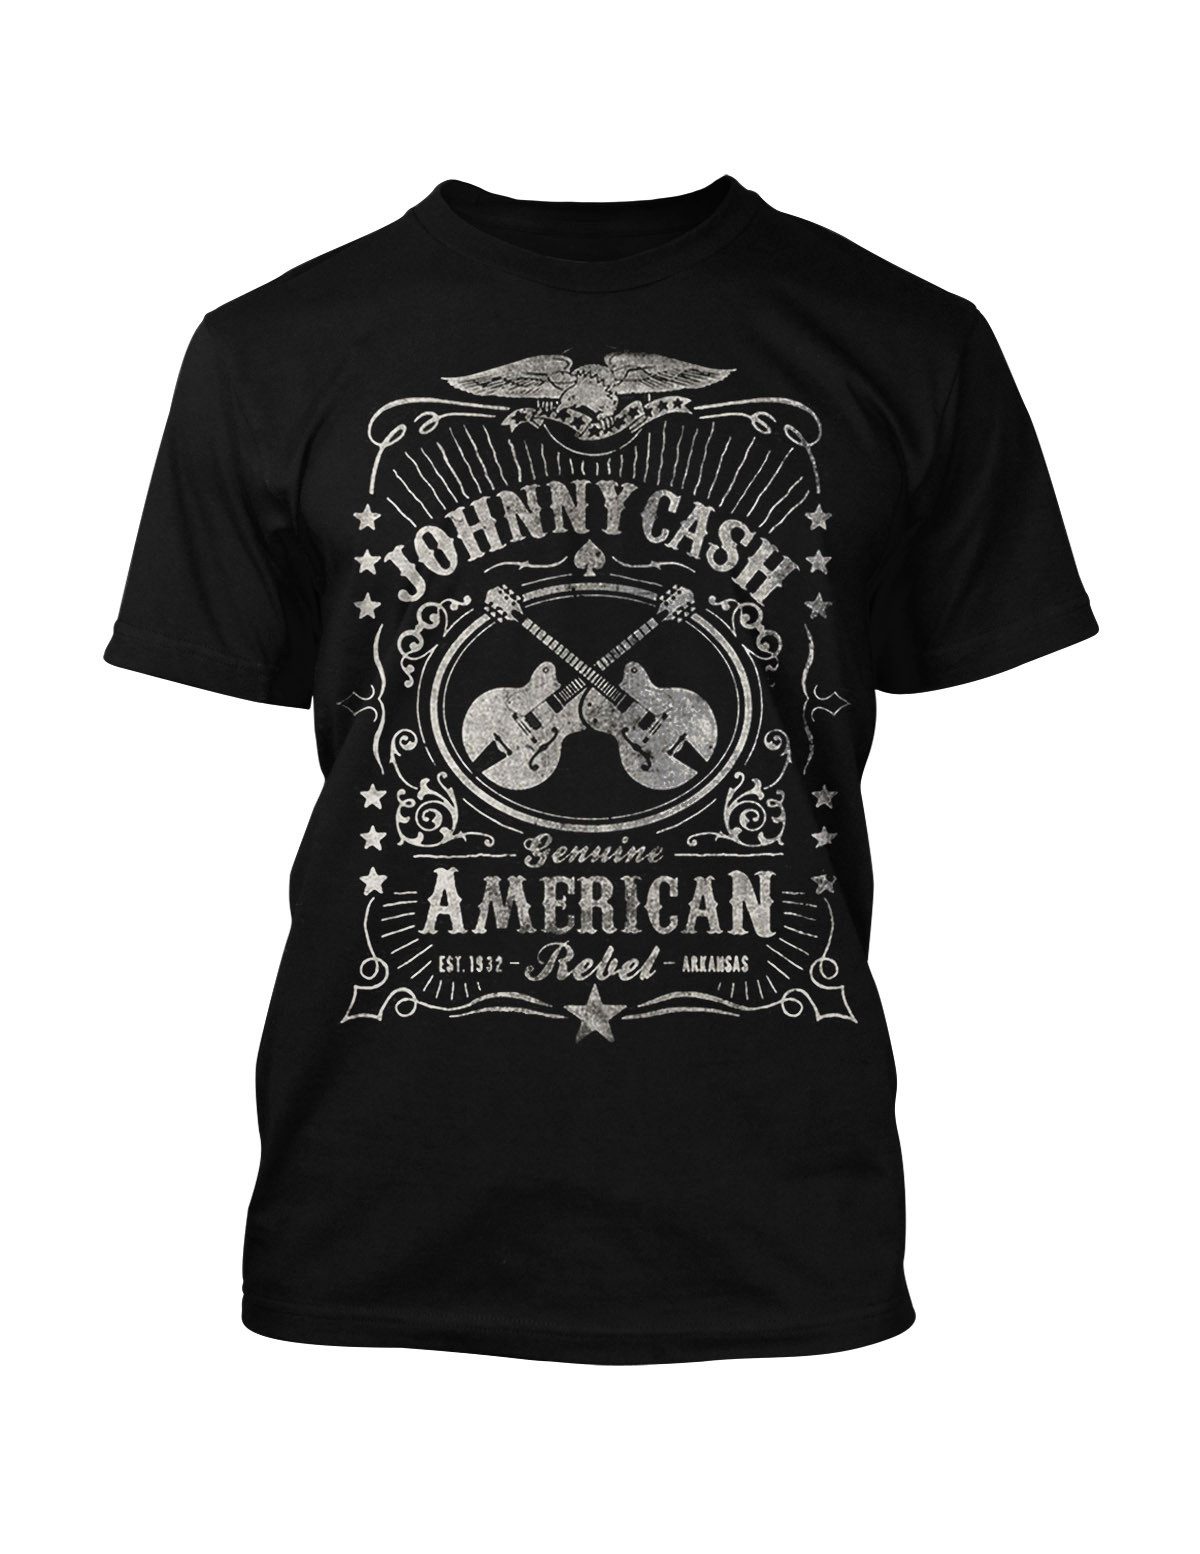 Johnny Cash T-Shirt American Rebel